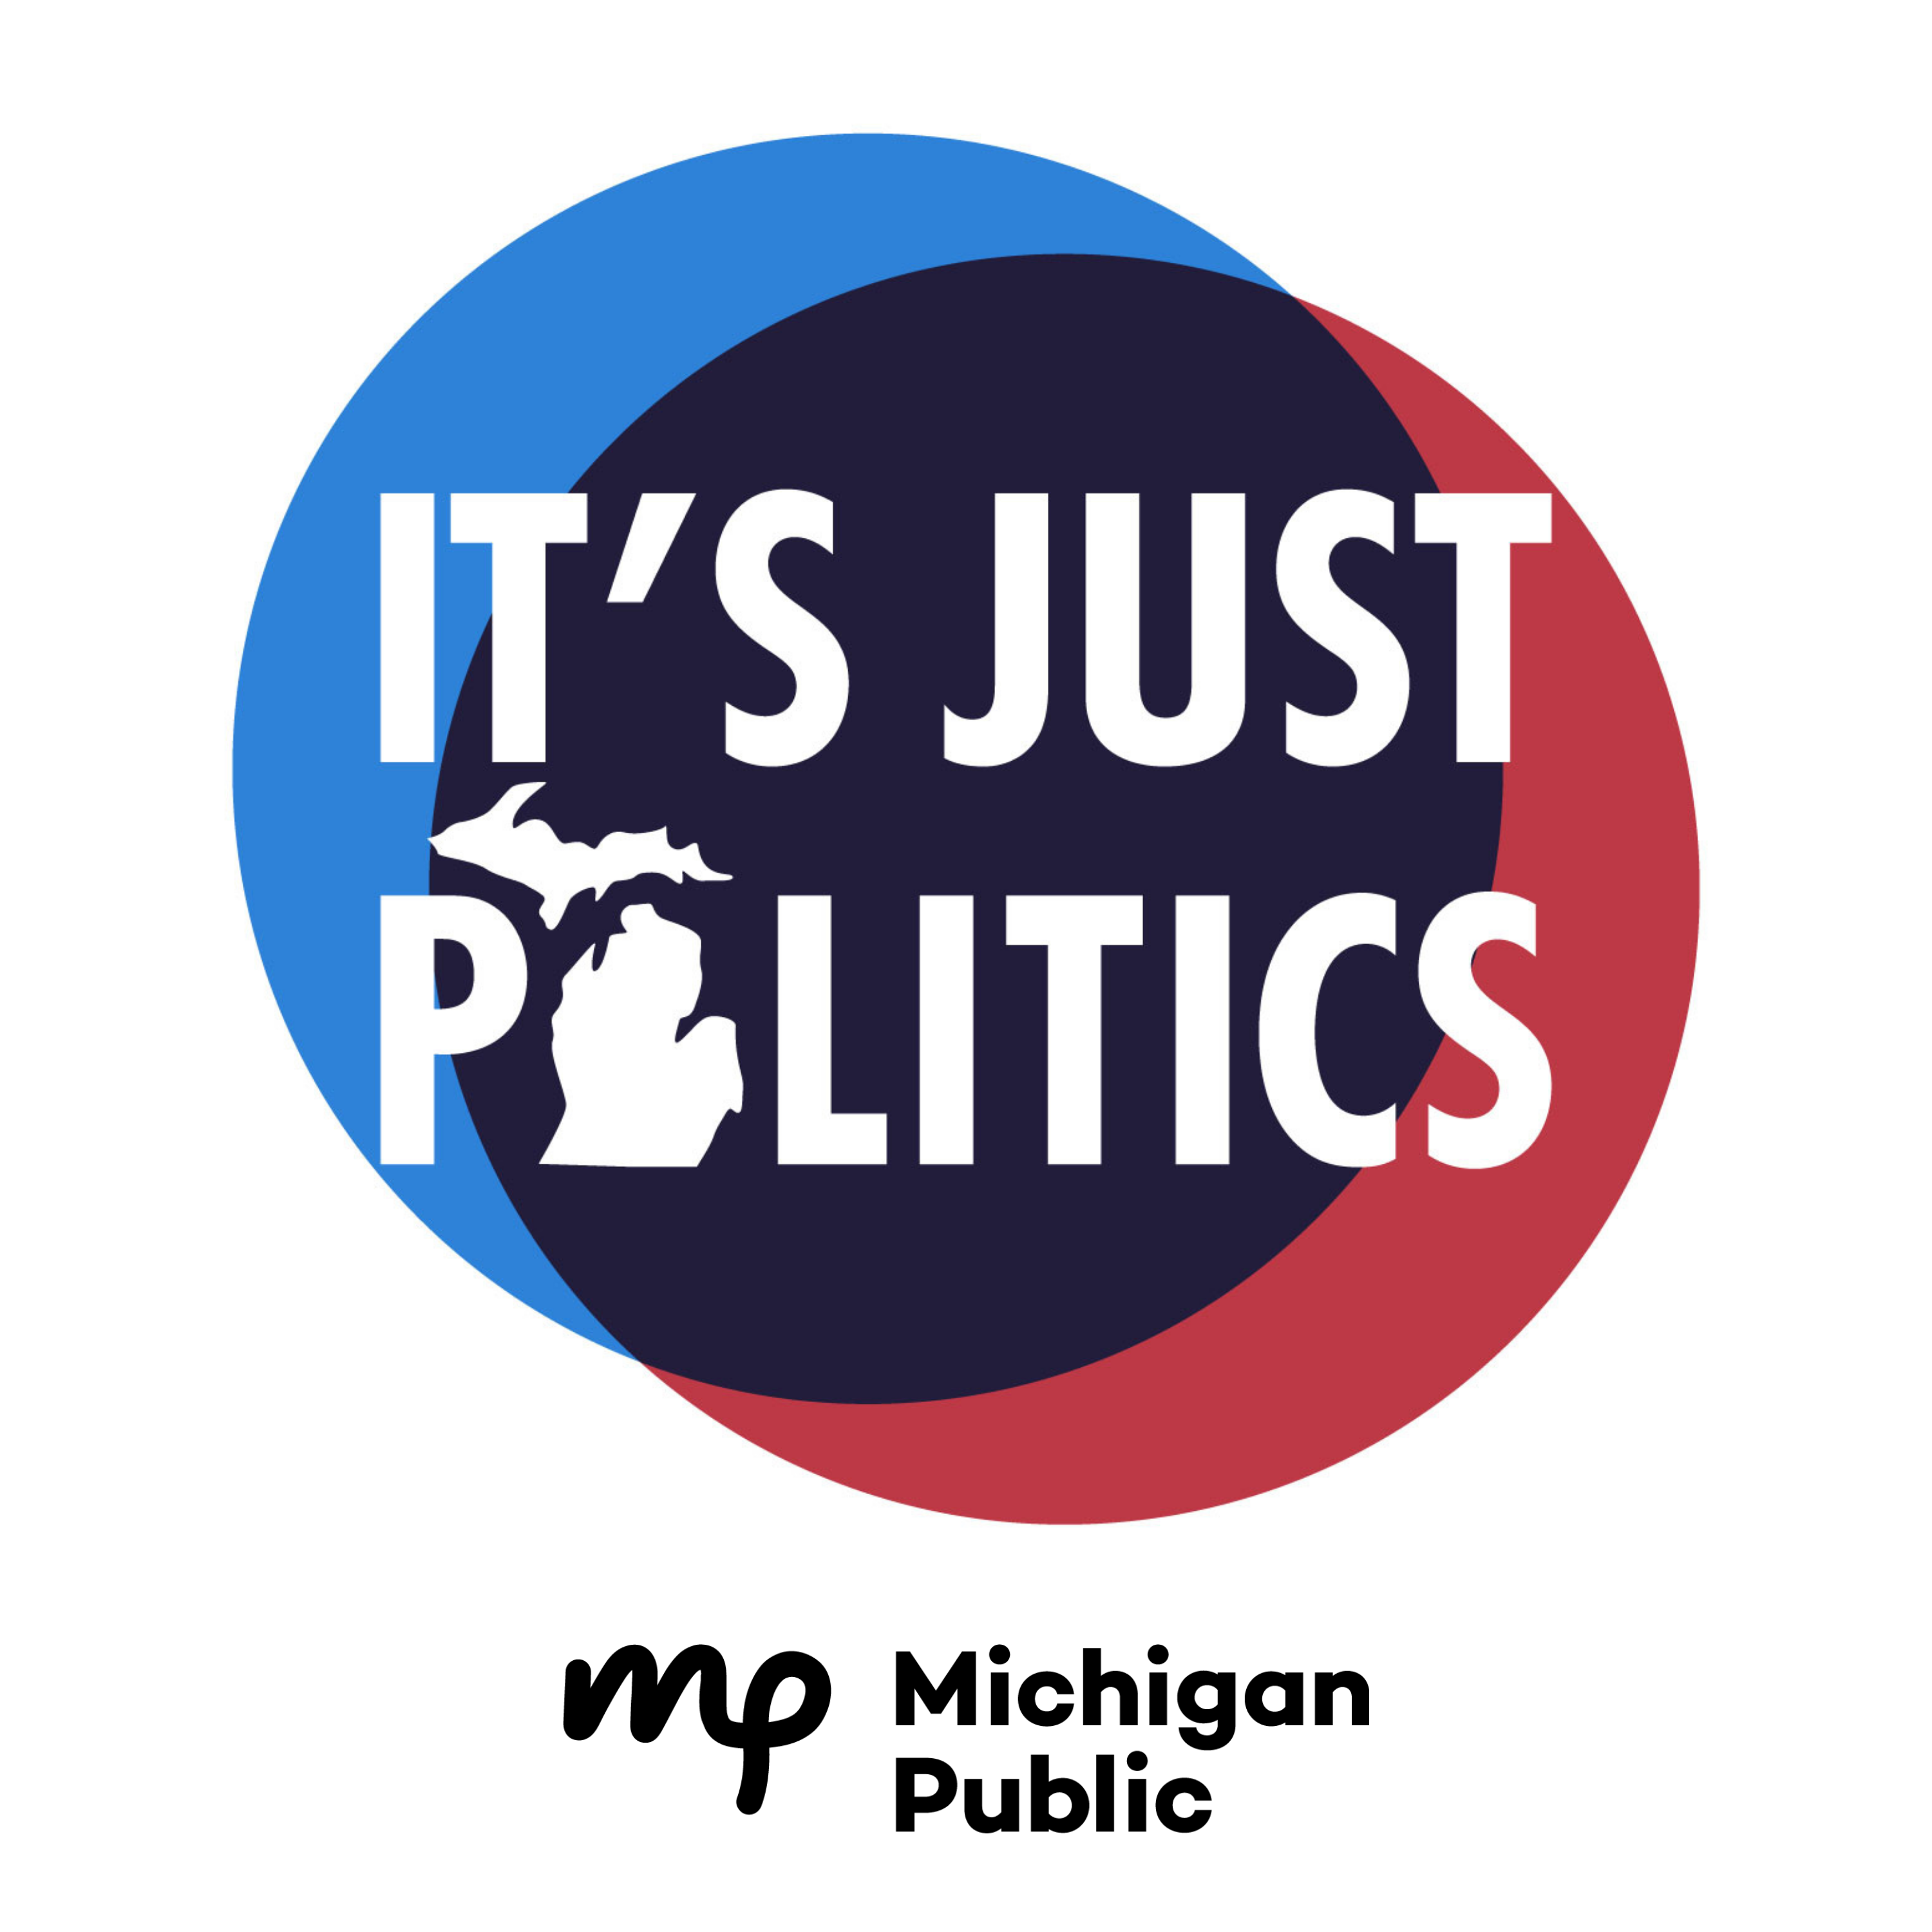 Dig into Michigan politics with Zoe Clark